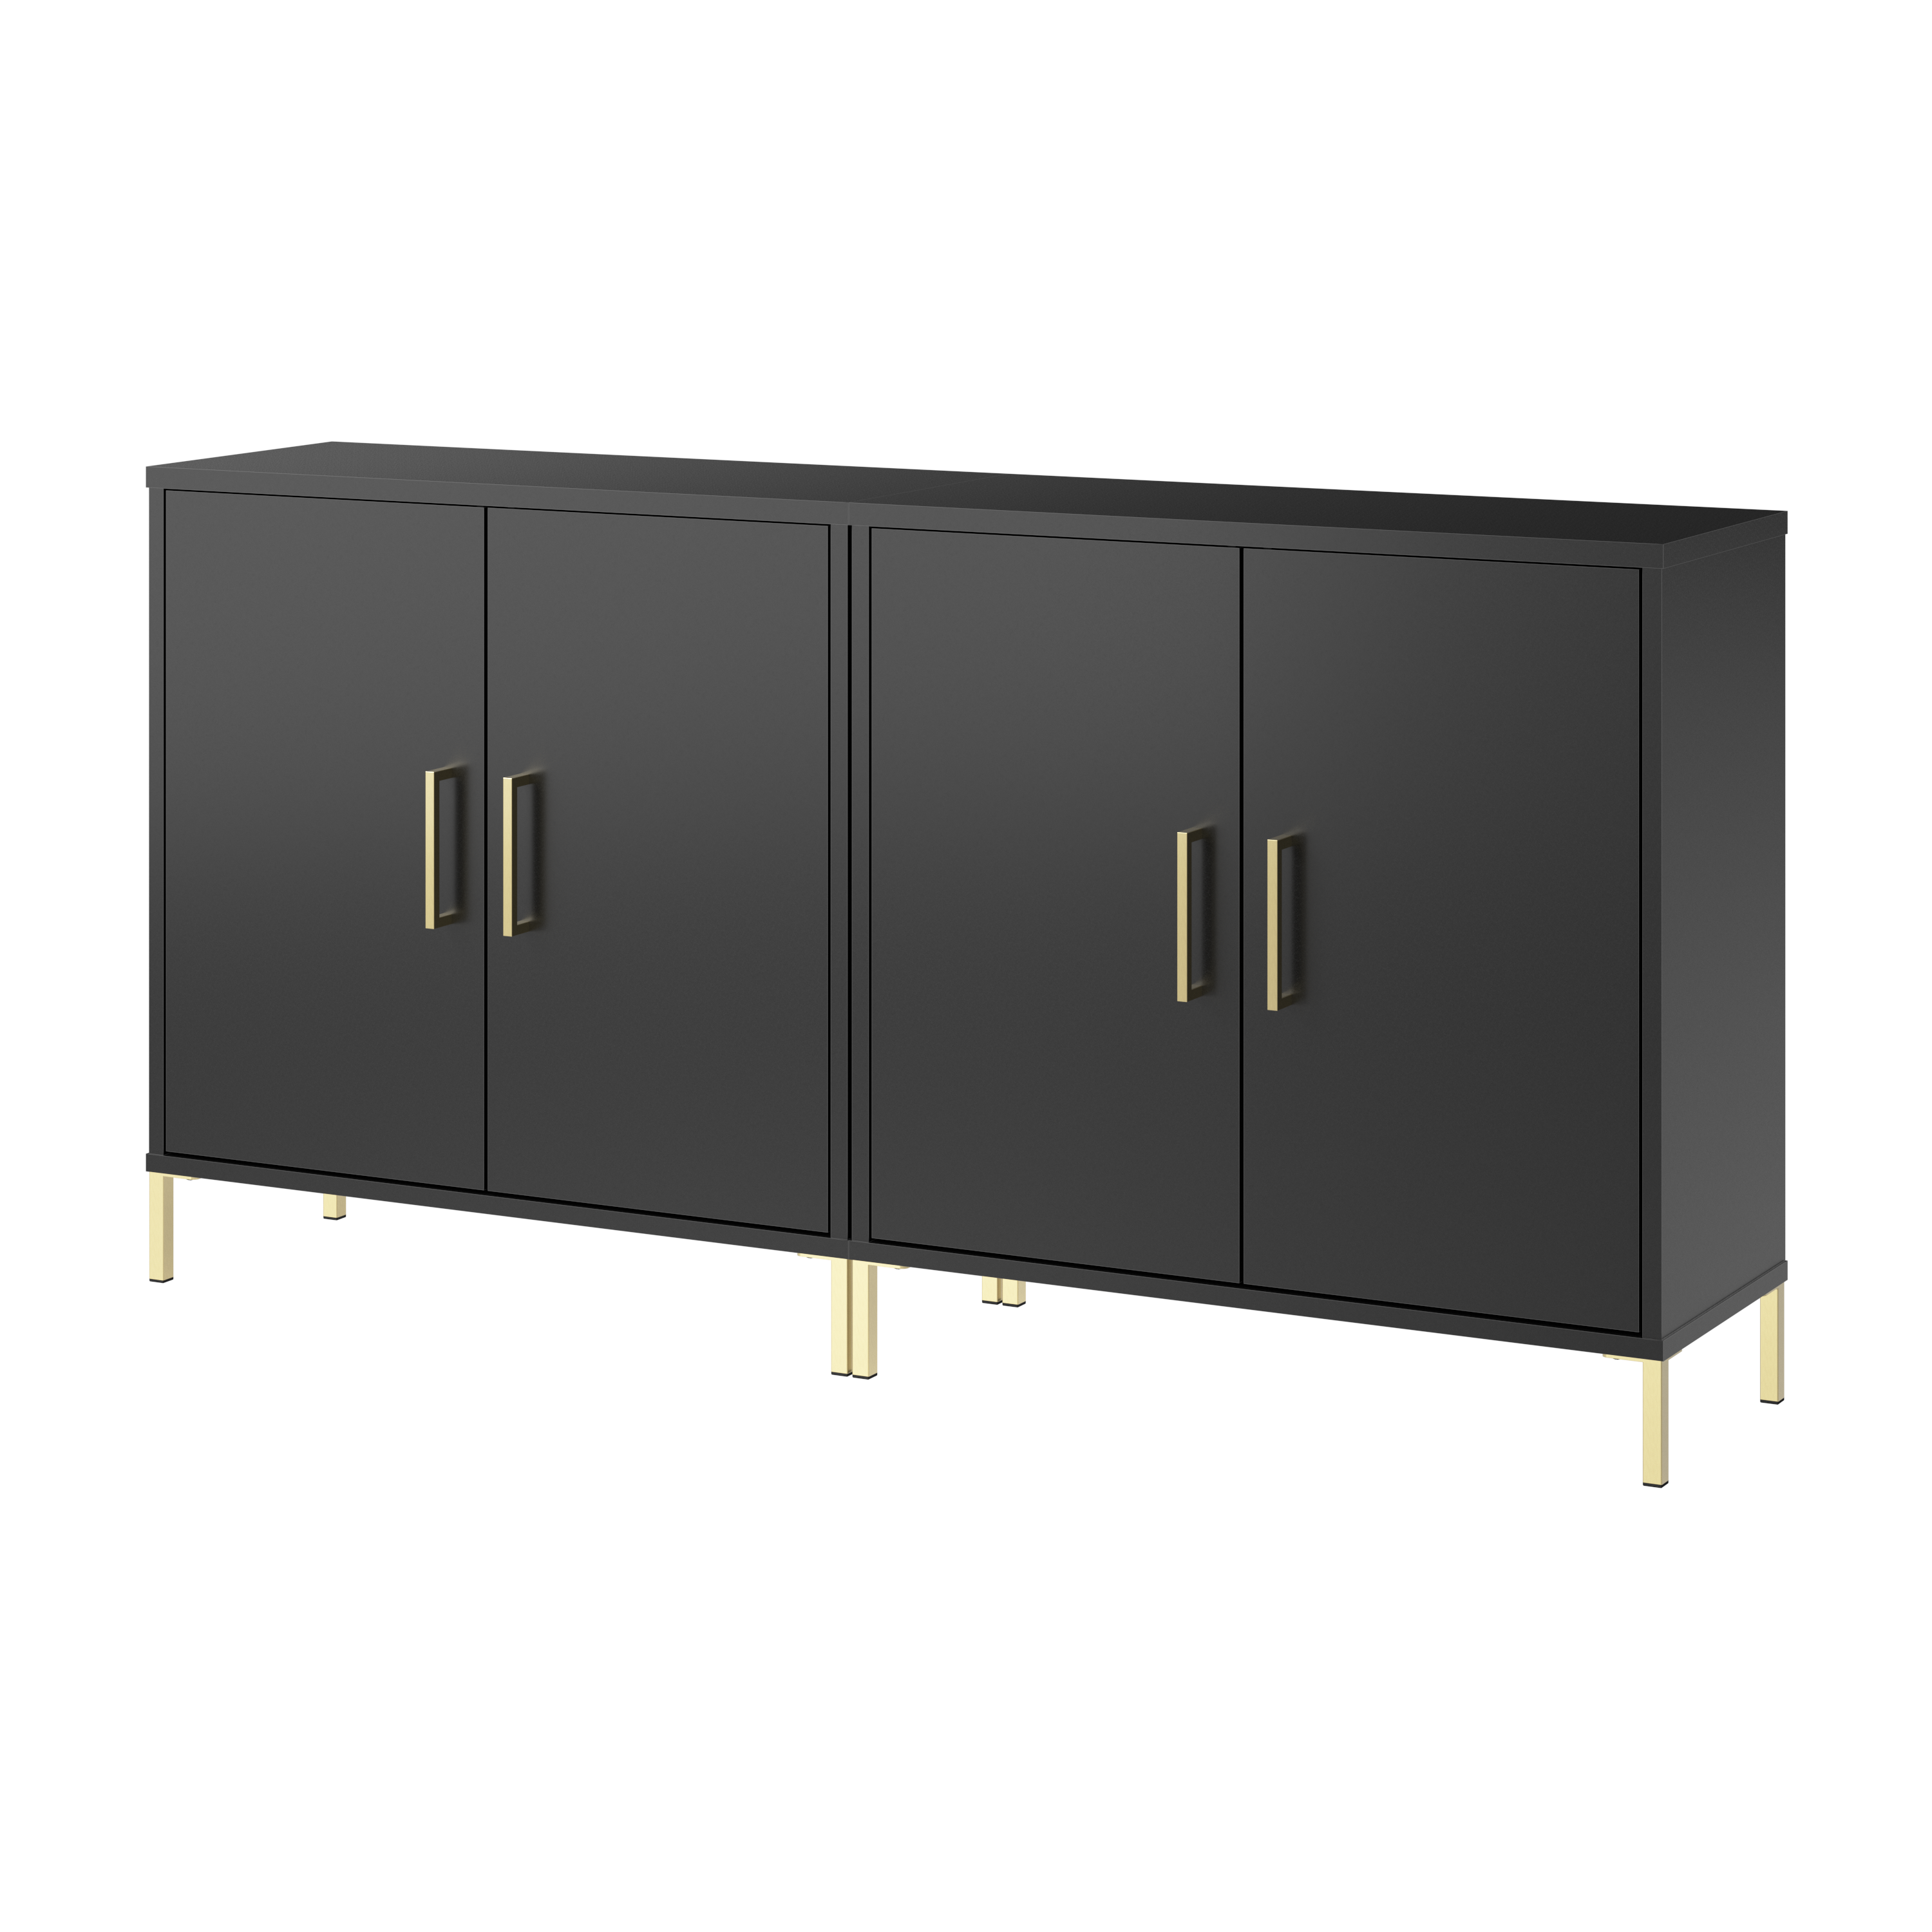 Shop Bush Furniture Soho Low Storage Cabinet with Doors - Set of 2 02 SHH001BL #color_black stipple